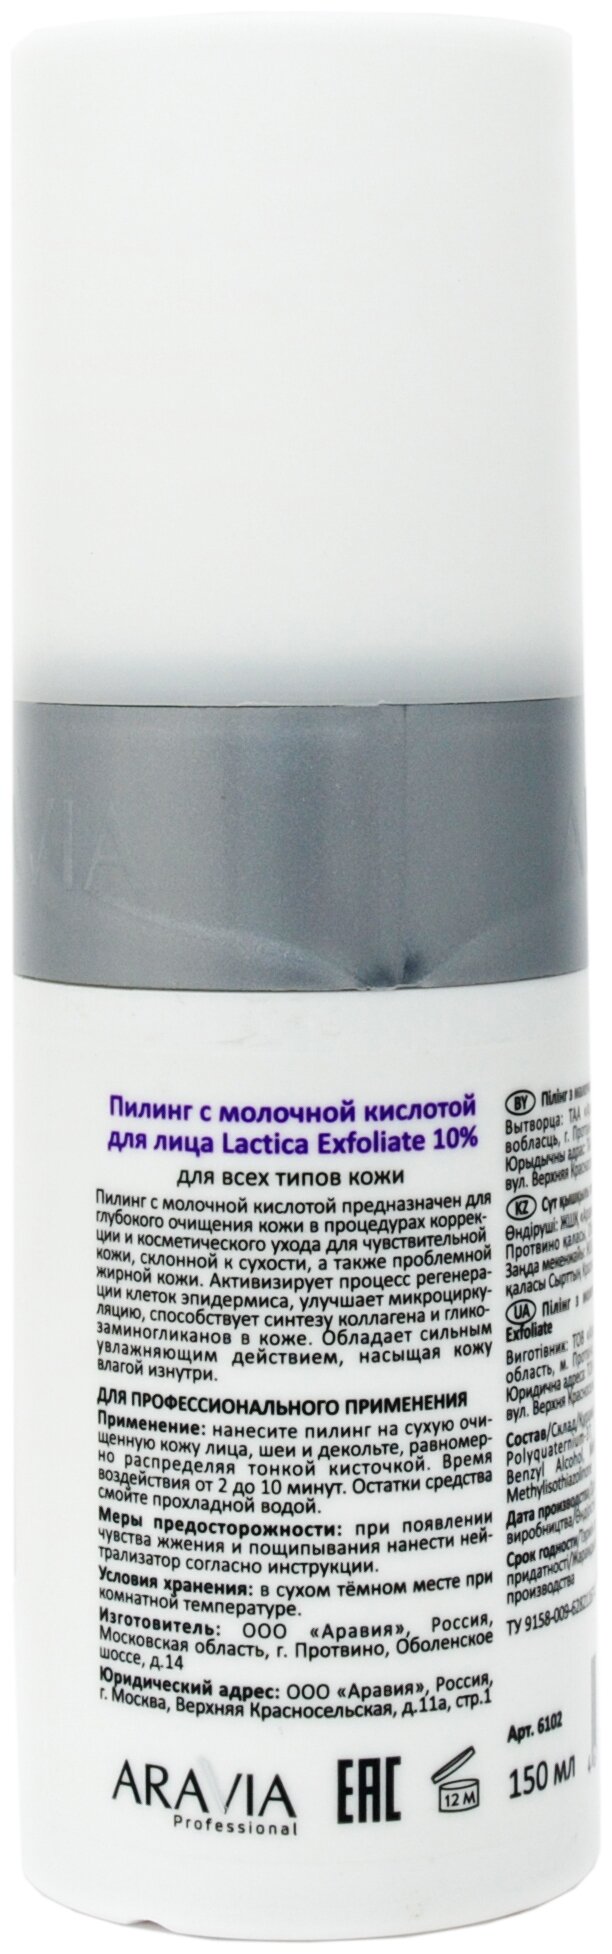 Aravia professional Пилинг с молочной кислотой Lactica Exfoliate, 150 мл. (Aravia professional, ) - фото №2